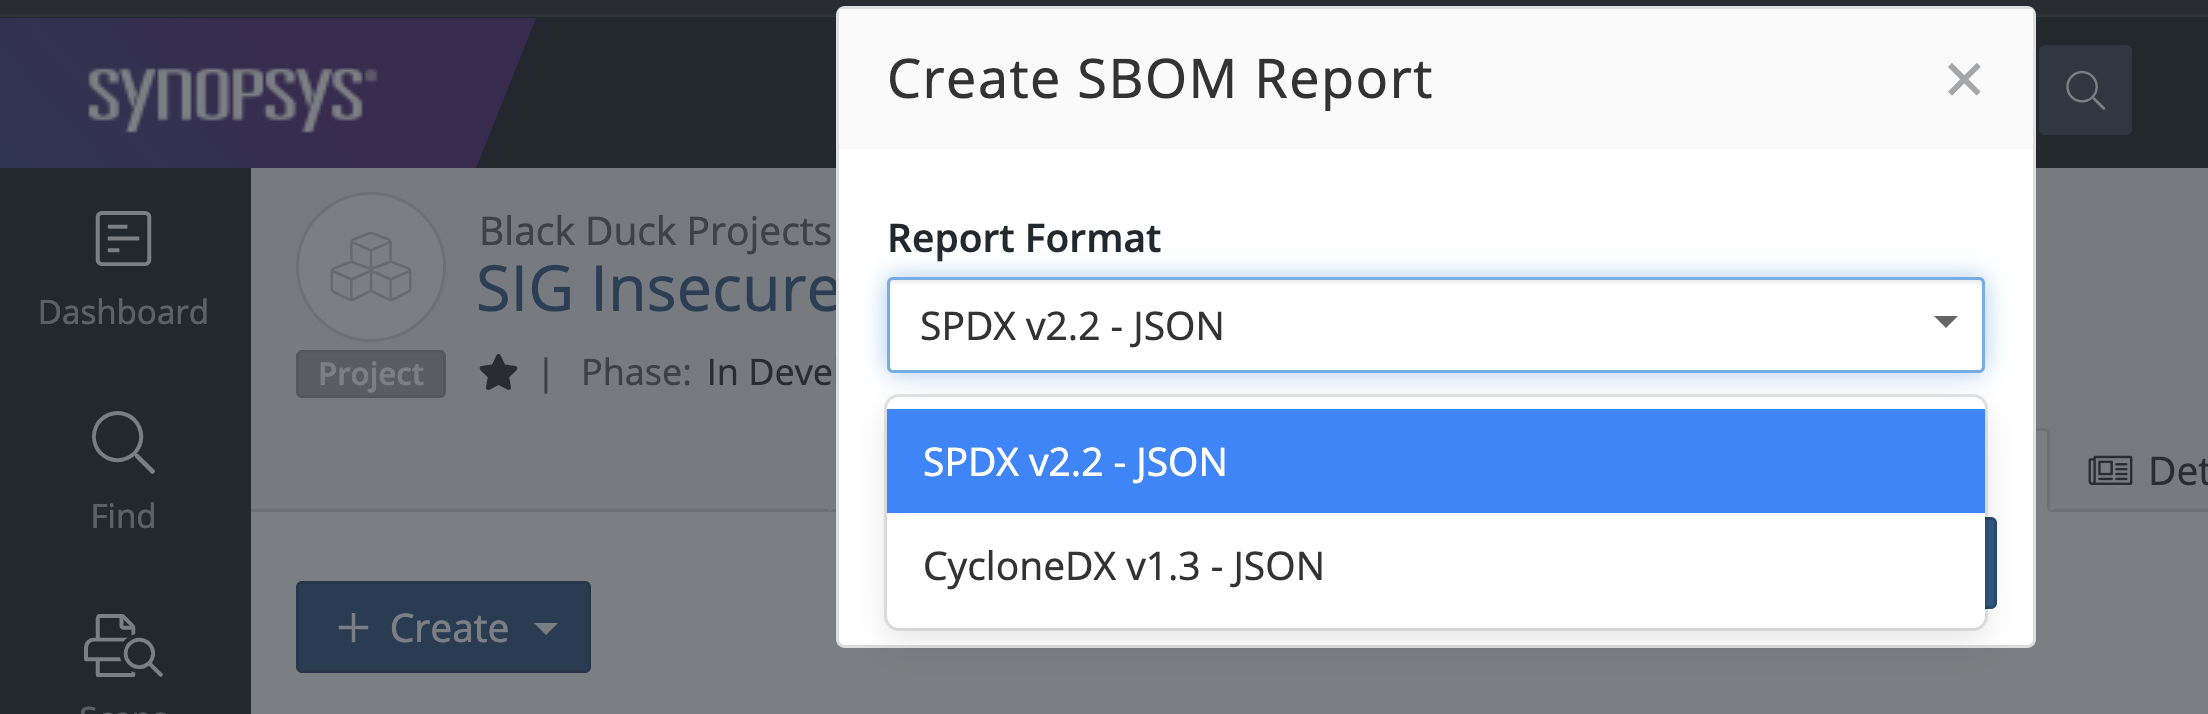 create SBOM report in Black Duck | Synopsys